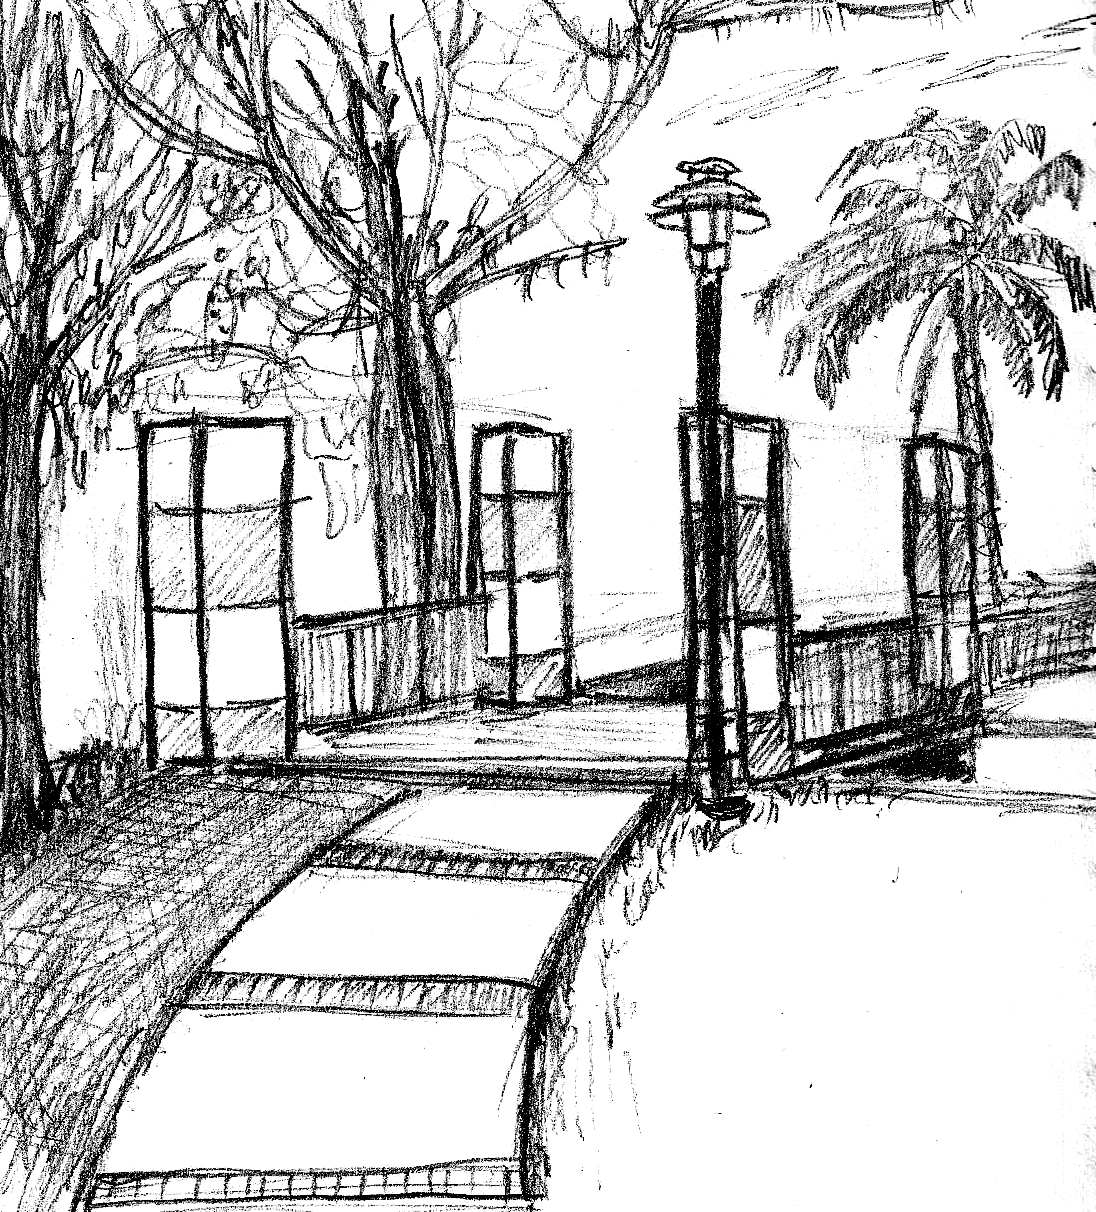 Легкие рисунки улицы. Рисунок парка карандашом. Пейзаж парка карандашом. Зарисовки пейзажа городского парка. Городской пейзаж рисунок карандашом.